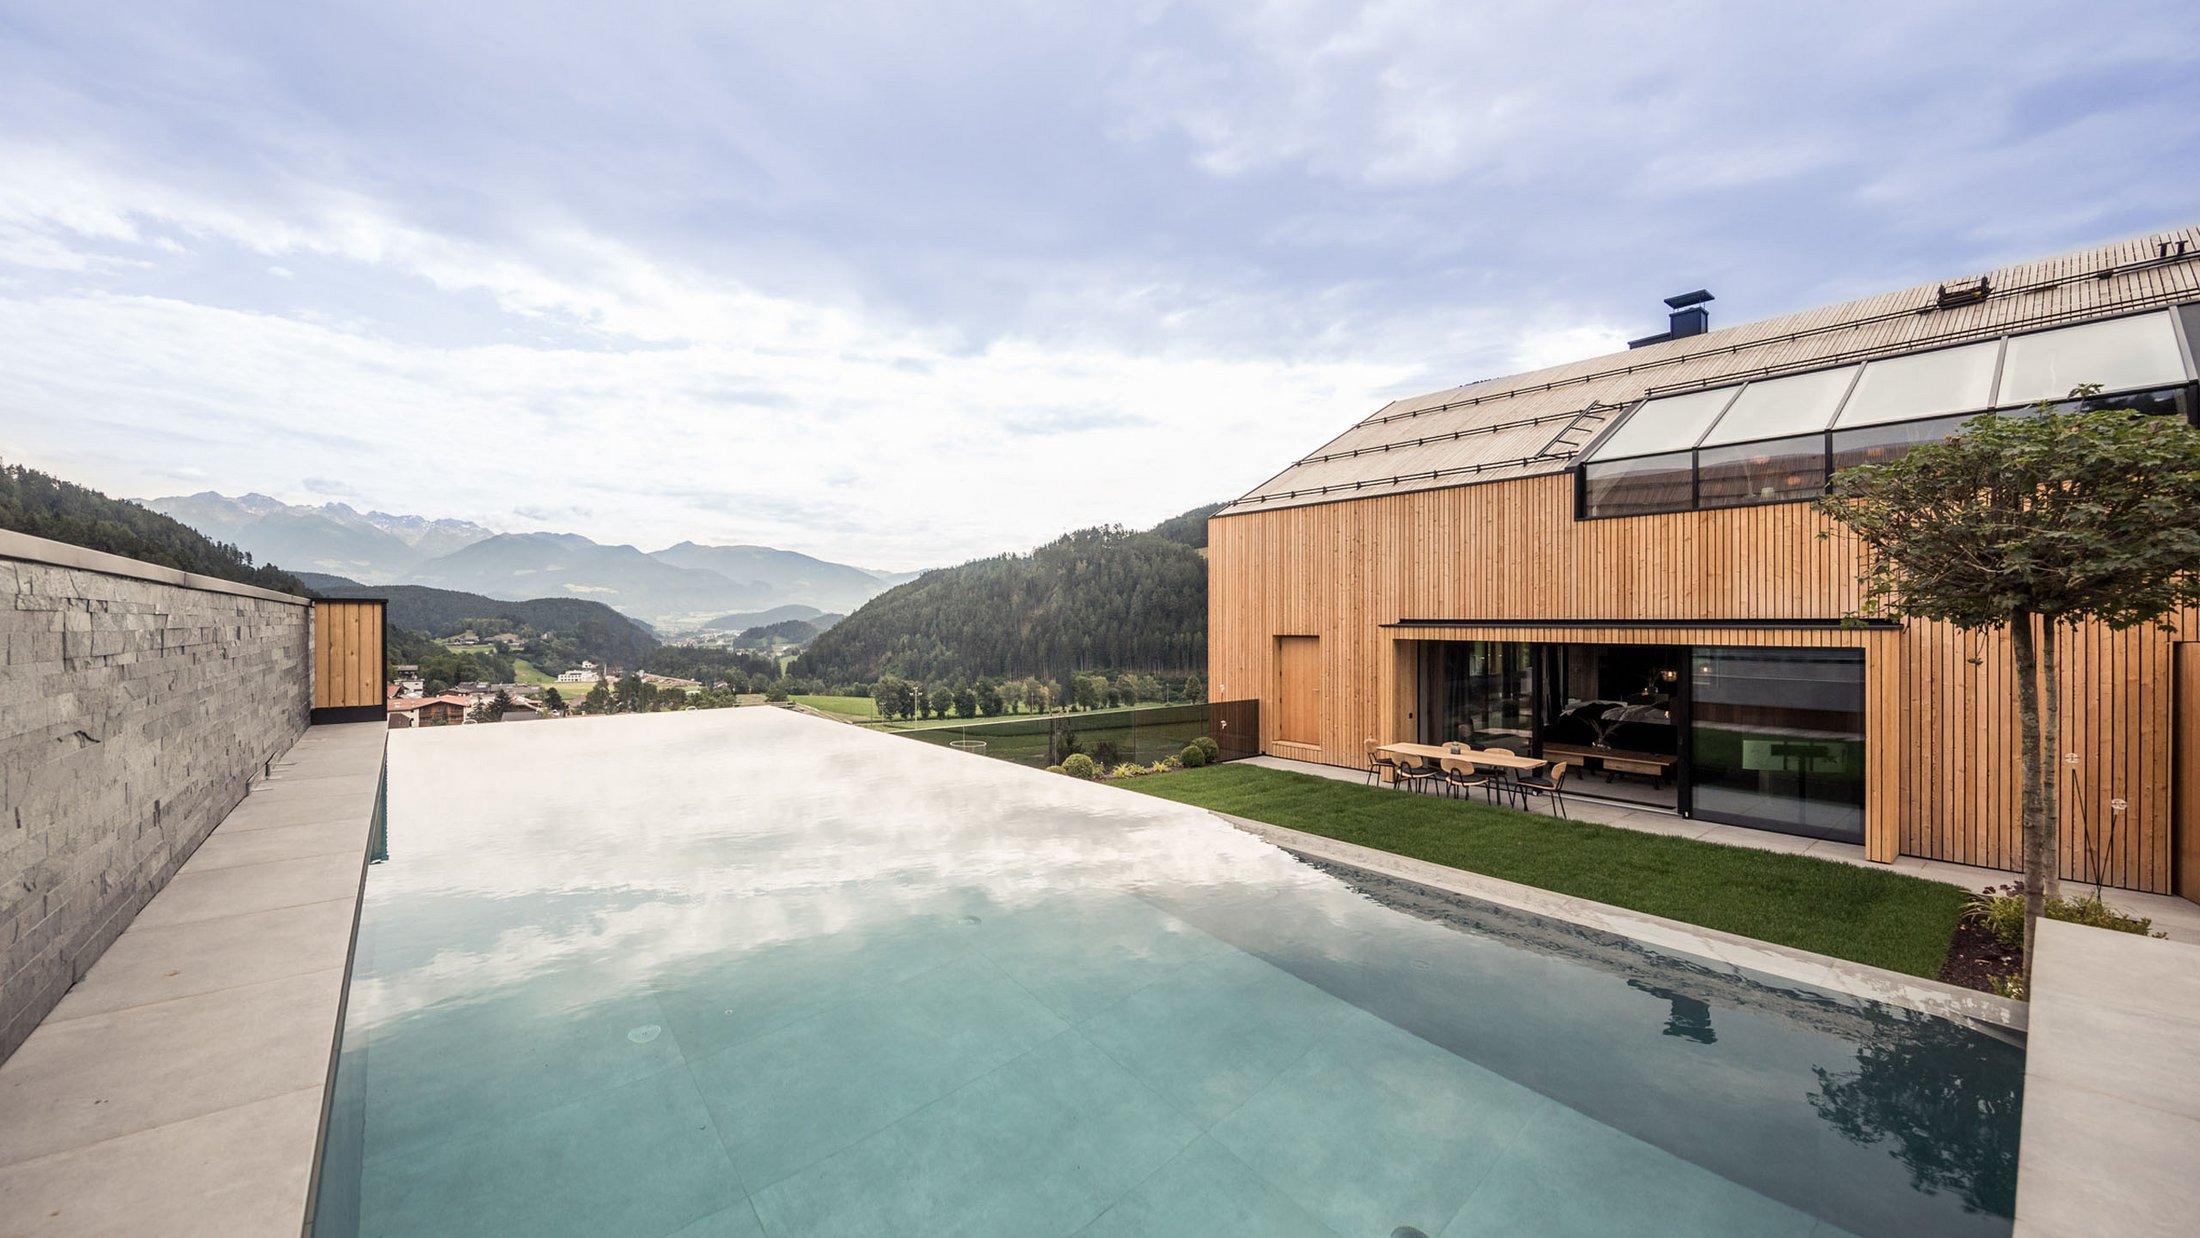 Luxuriöses Spa-Erlebnis in Ihrem Chalet in Südtirol mit Pool